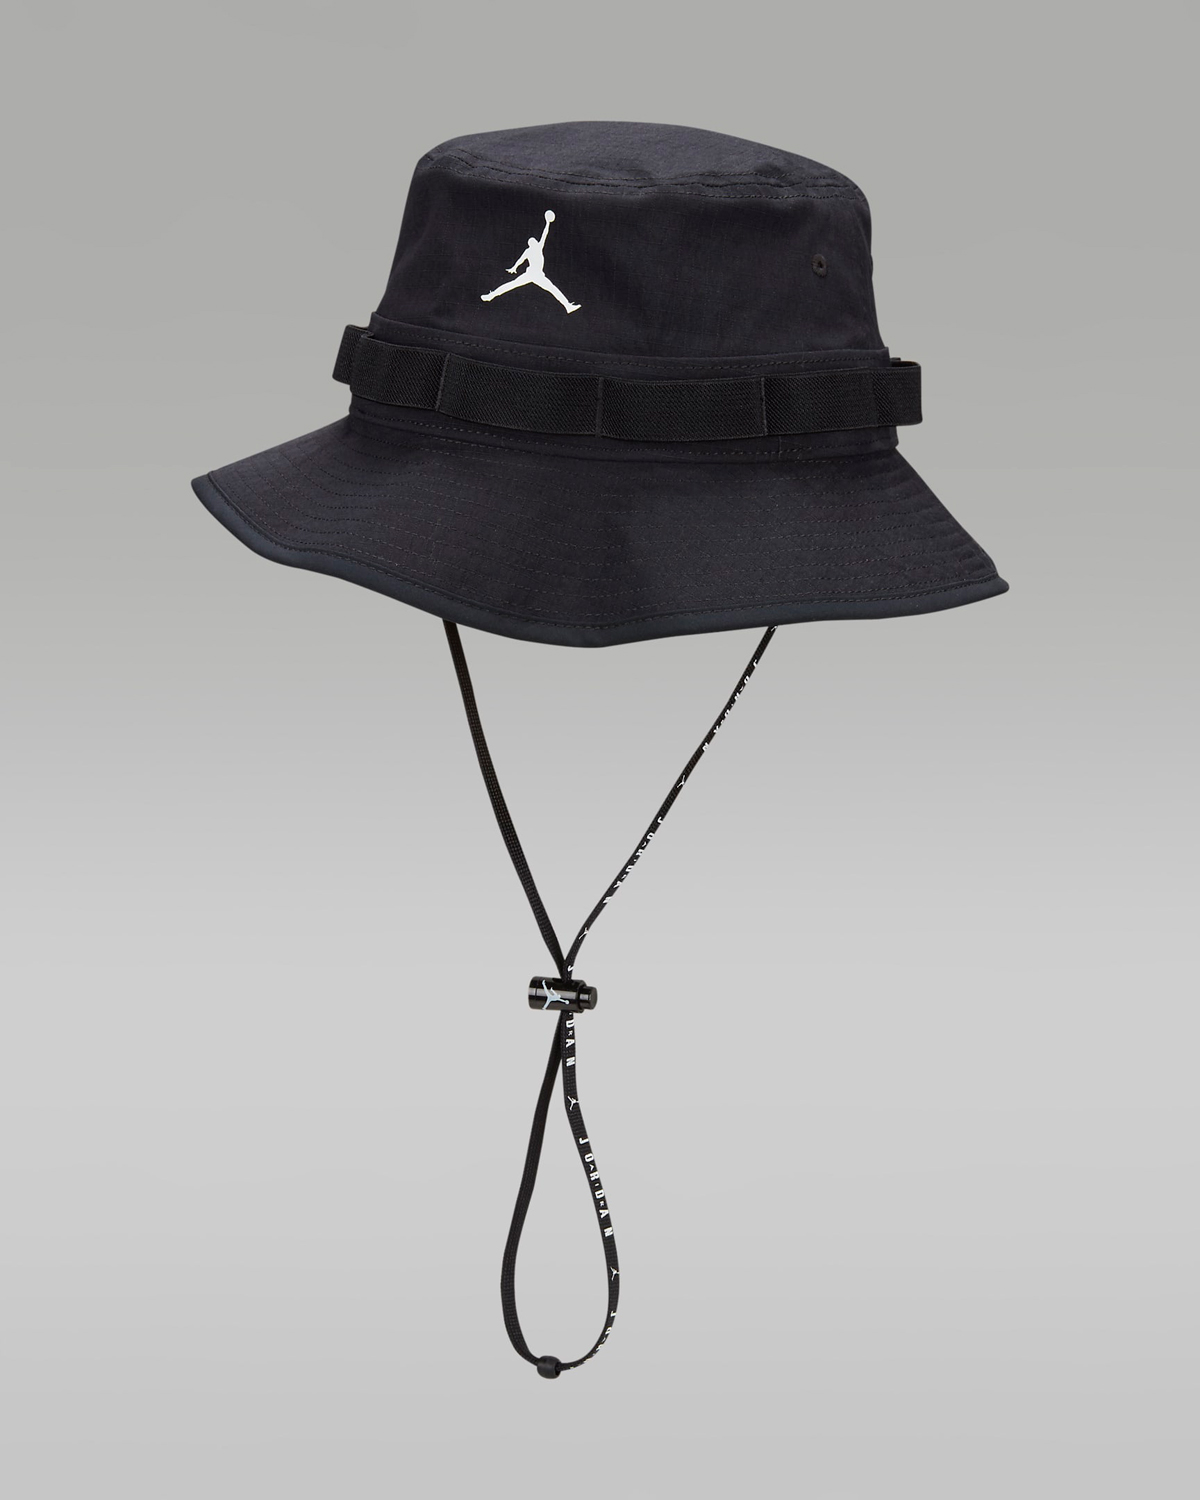 Jordan-Apex-Bucket-Hat-Black-White-1